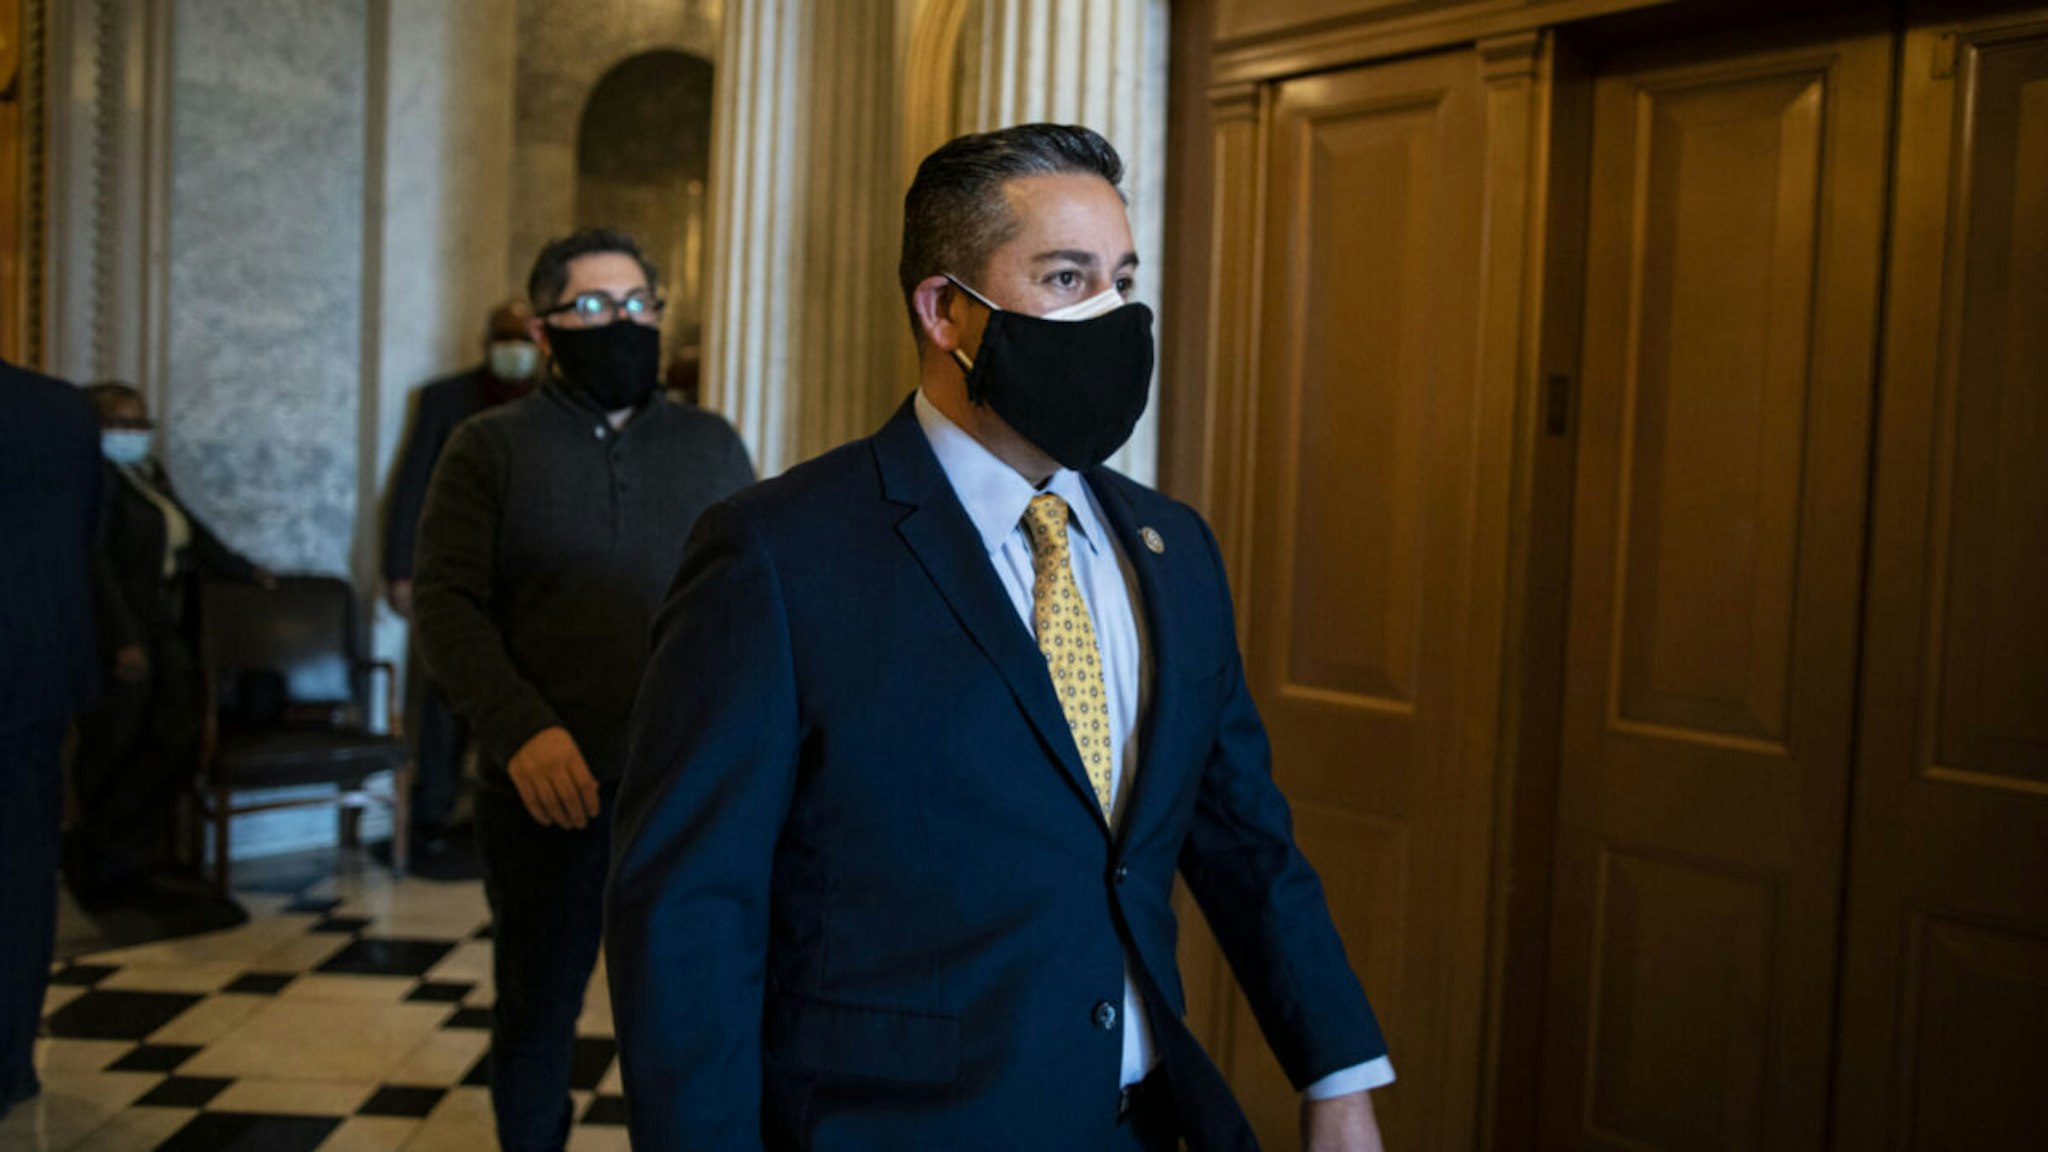 Senator-elect Ben Ray Lujan, a Democrat from New Mexico, walks through the U.S. Capitol in Washington, D.C., U.S., on Wednesday, Dec. 9, 2020.